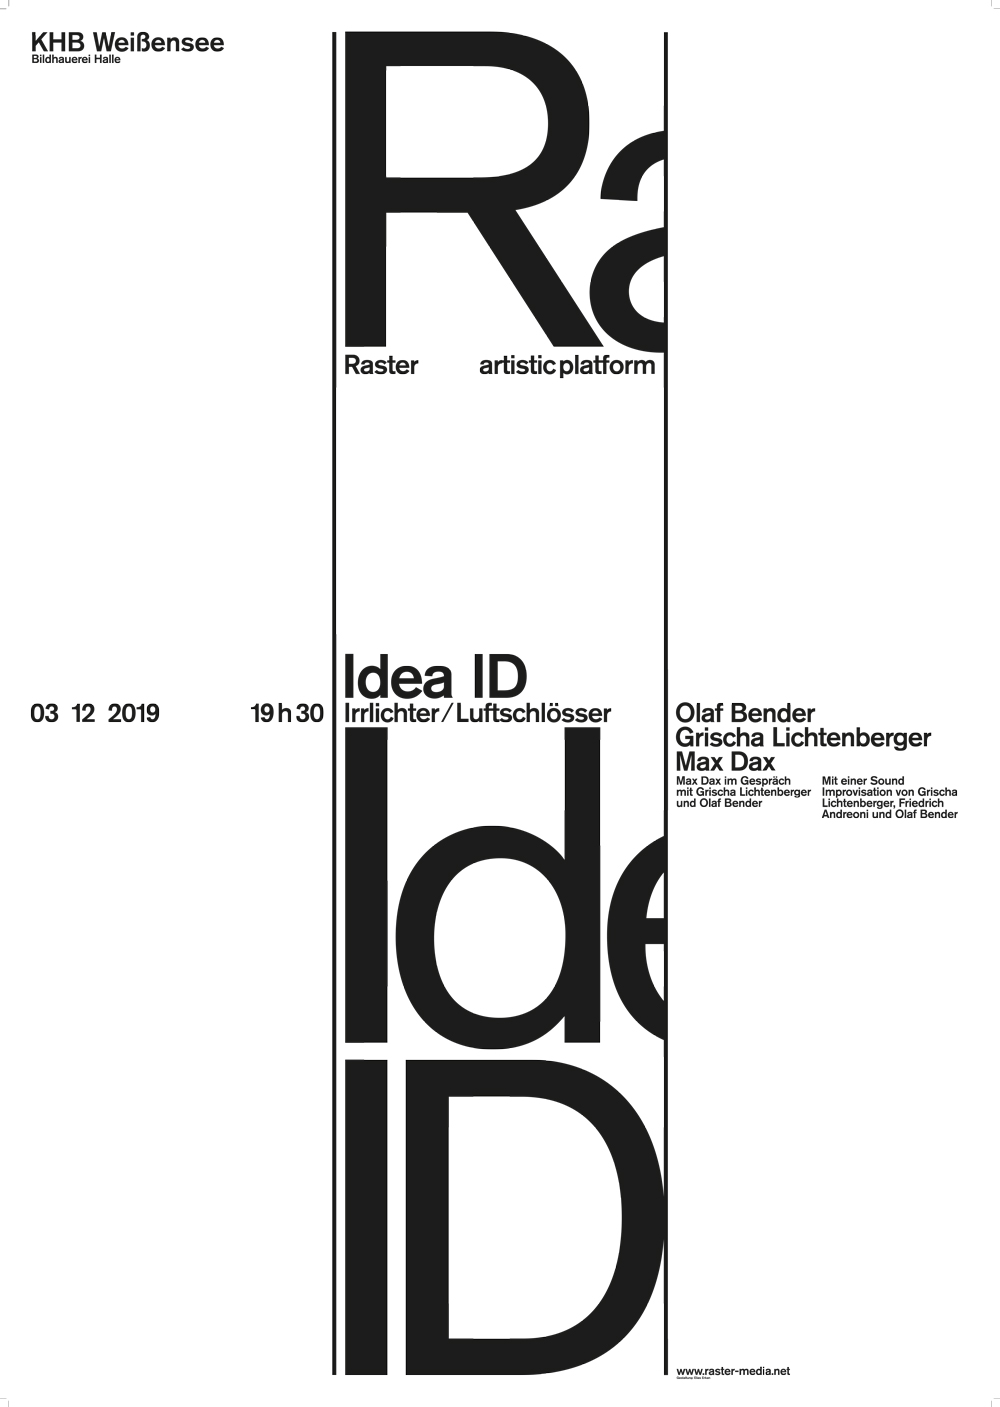 Raster KHB Idea ID Vortrag Plakat